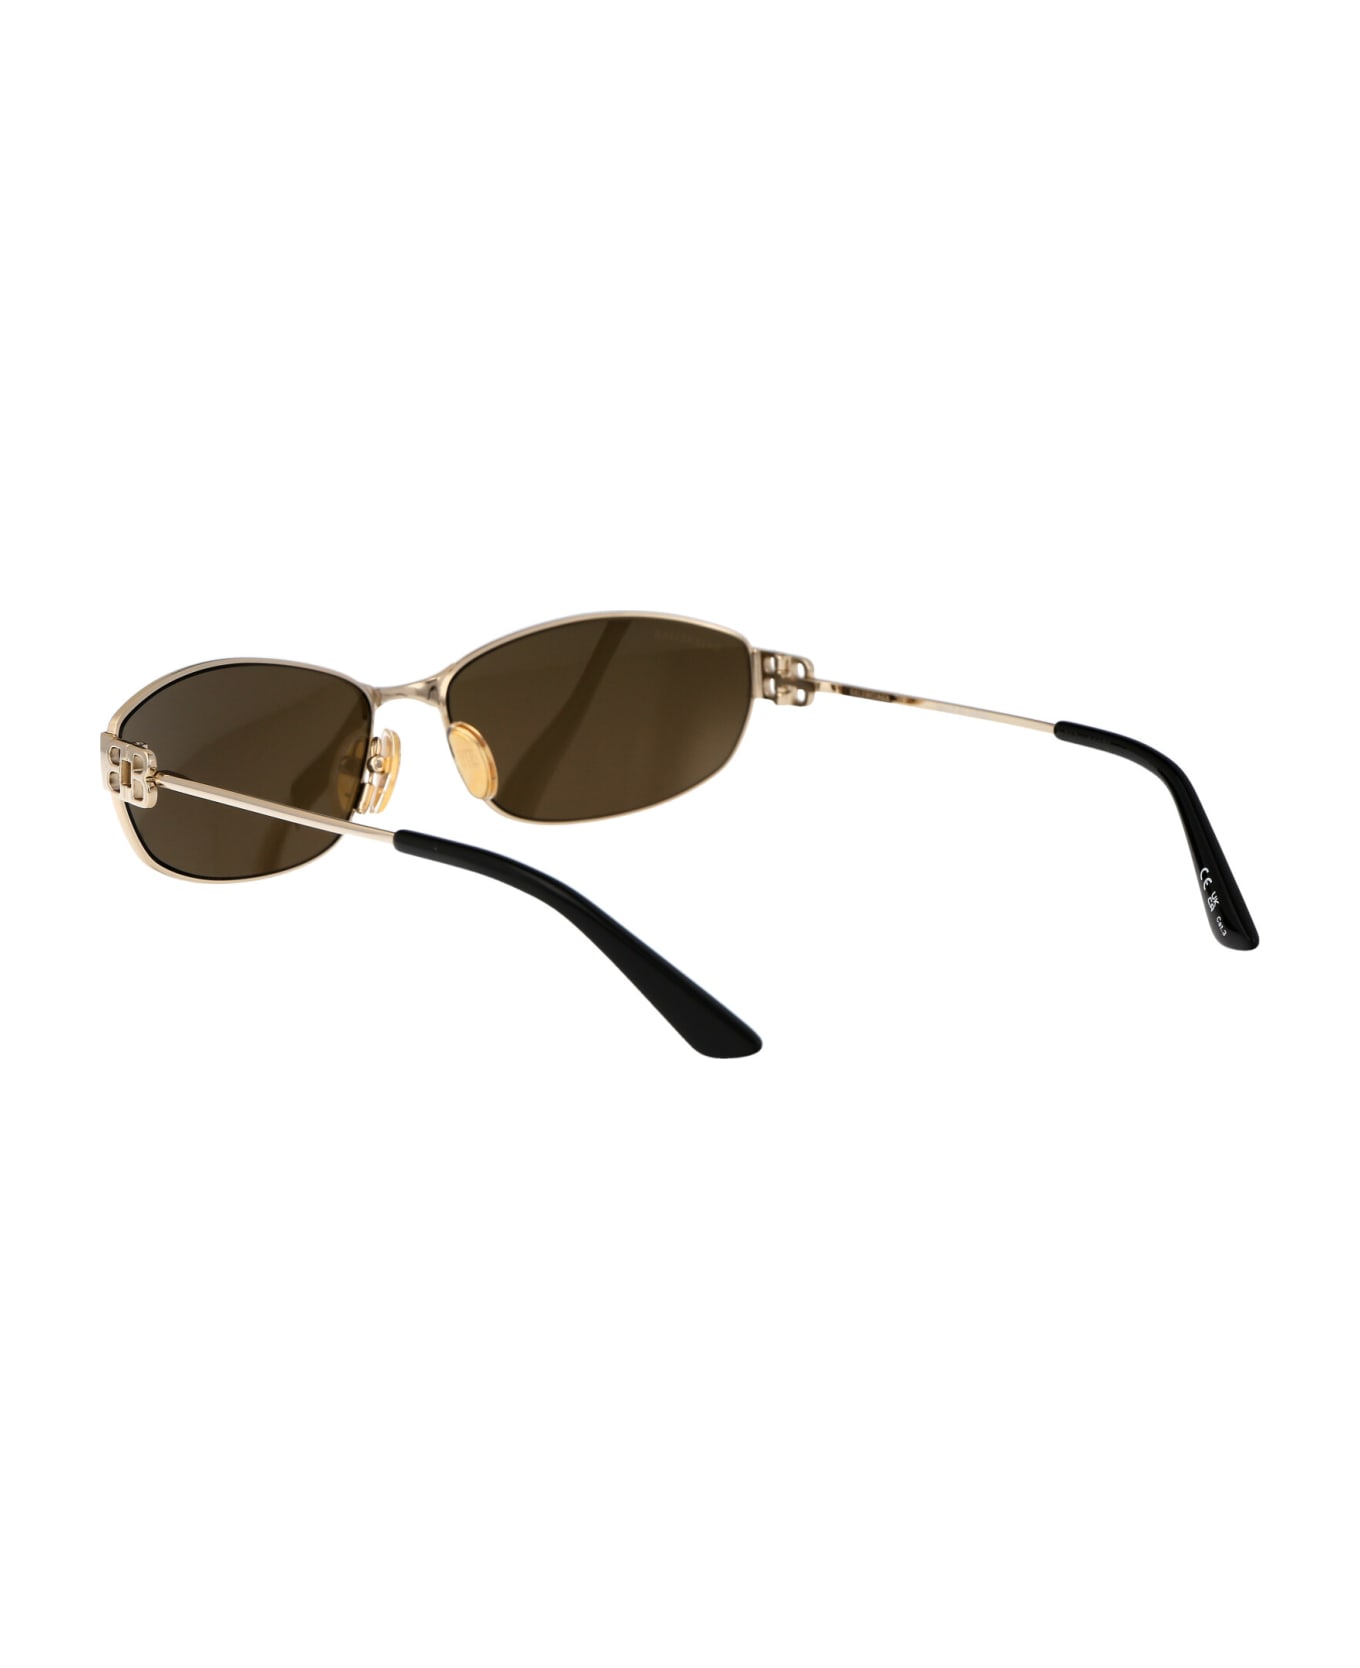 Balenciaga Eyewear Bb0336s Sunglasses - 003 GOLD GOLD BRONZE サングラス